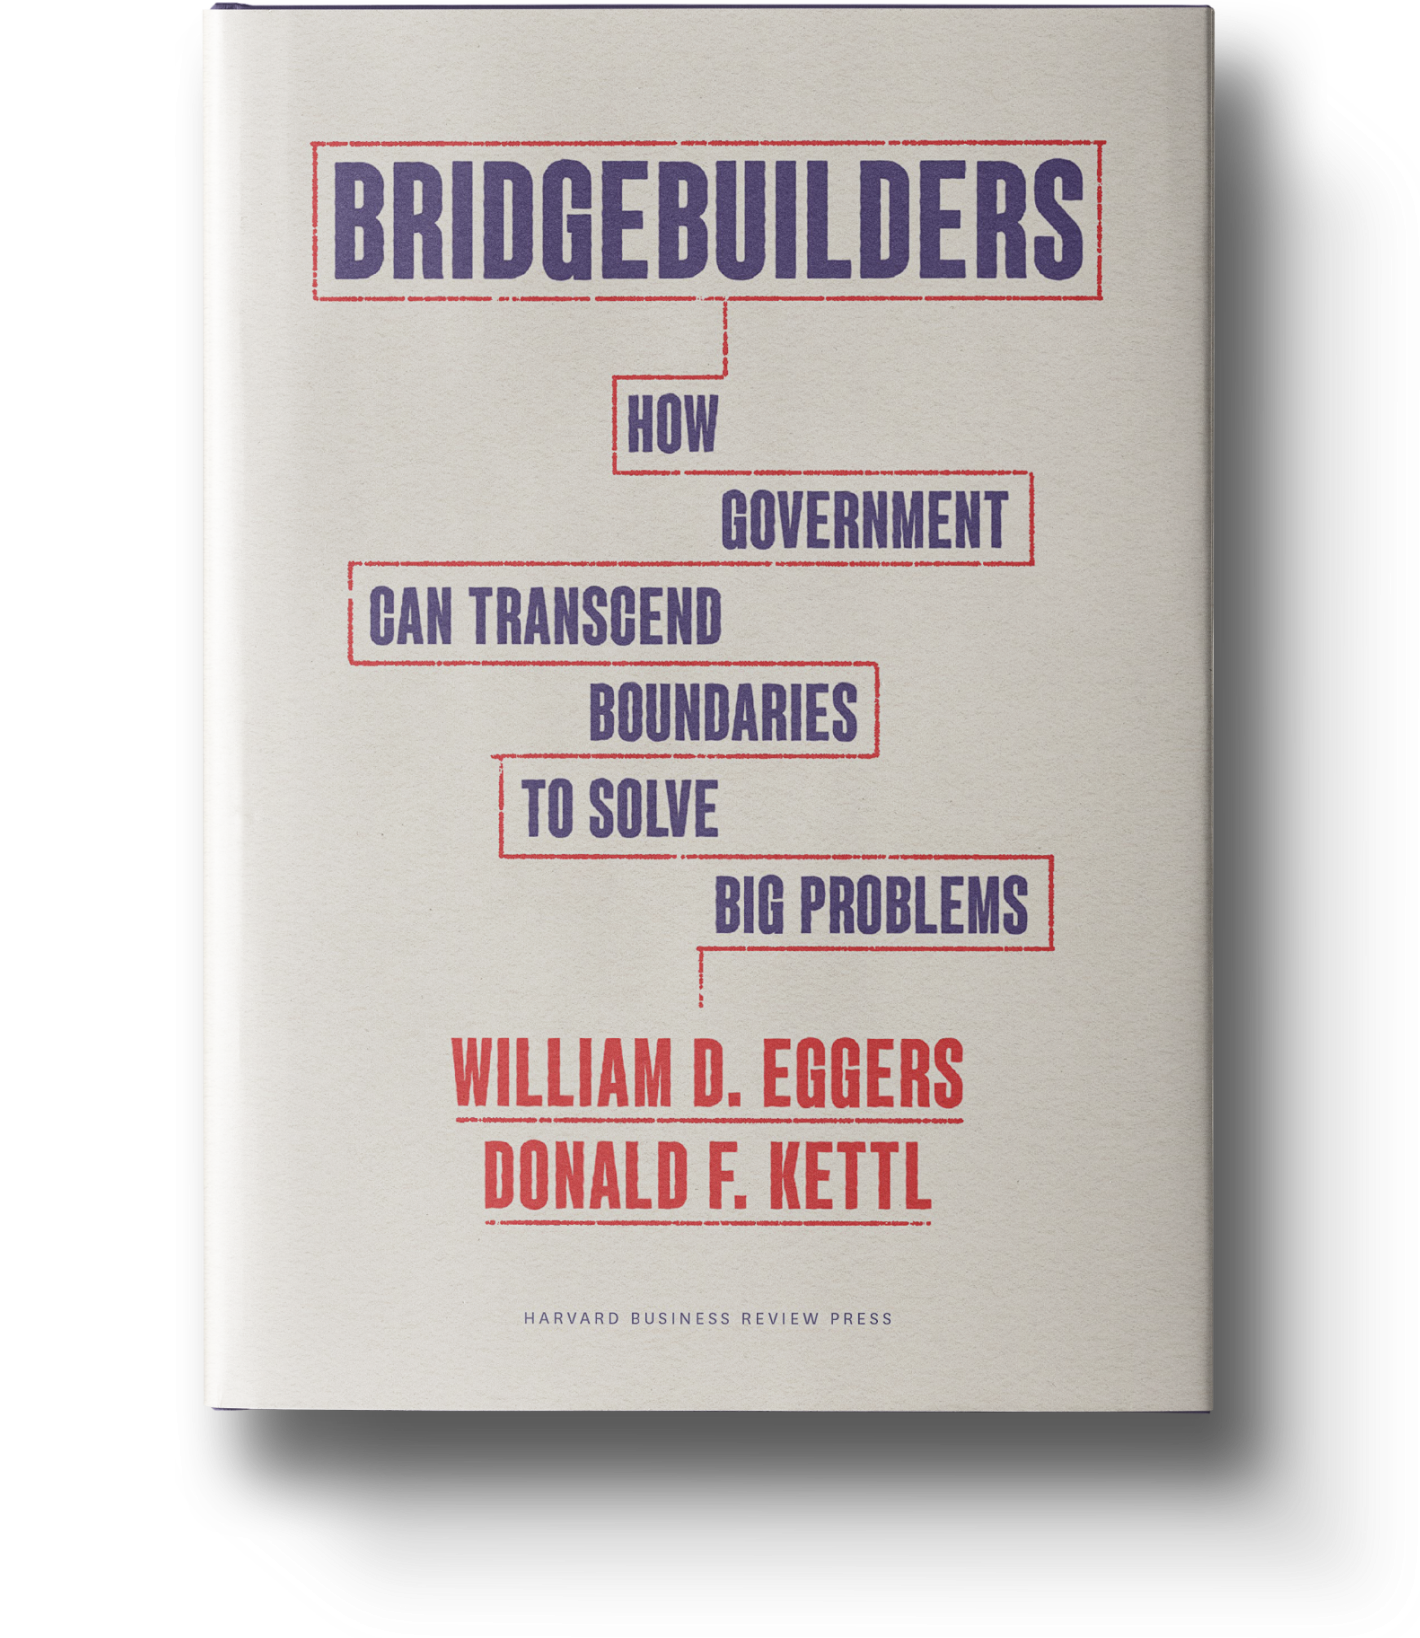 Bridgebuilders: How Government Can Transcend Boundaries to Solve Big Problems